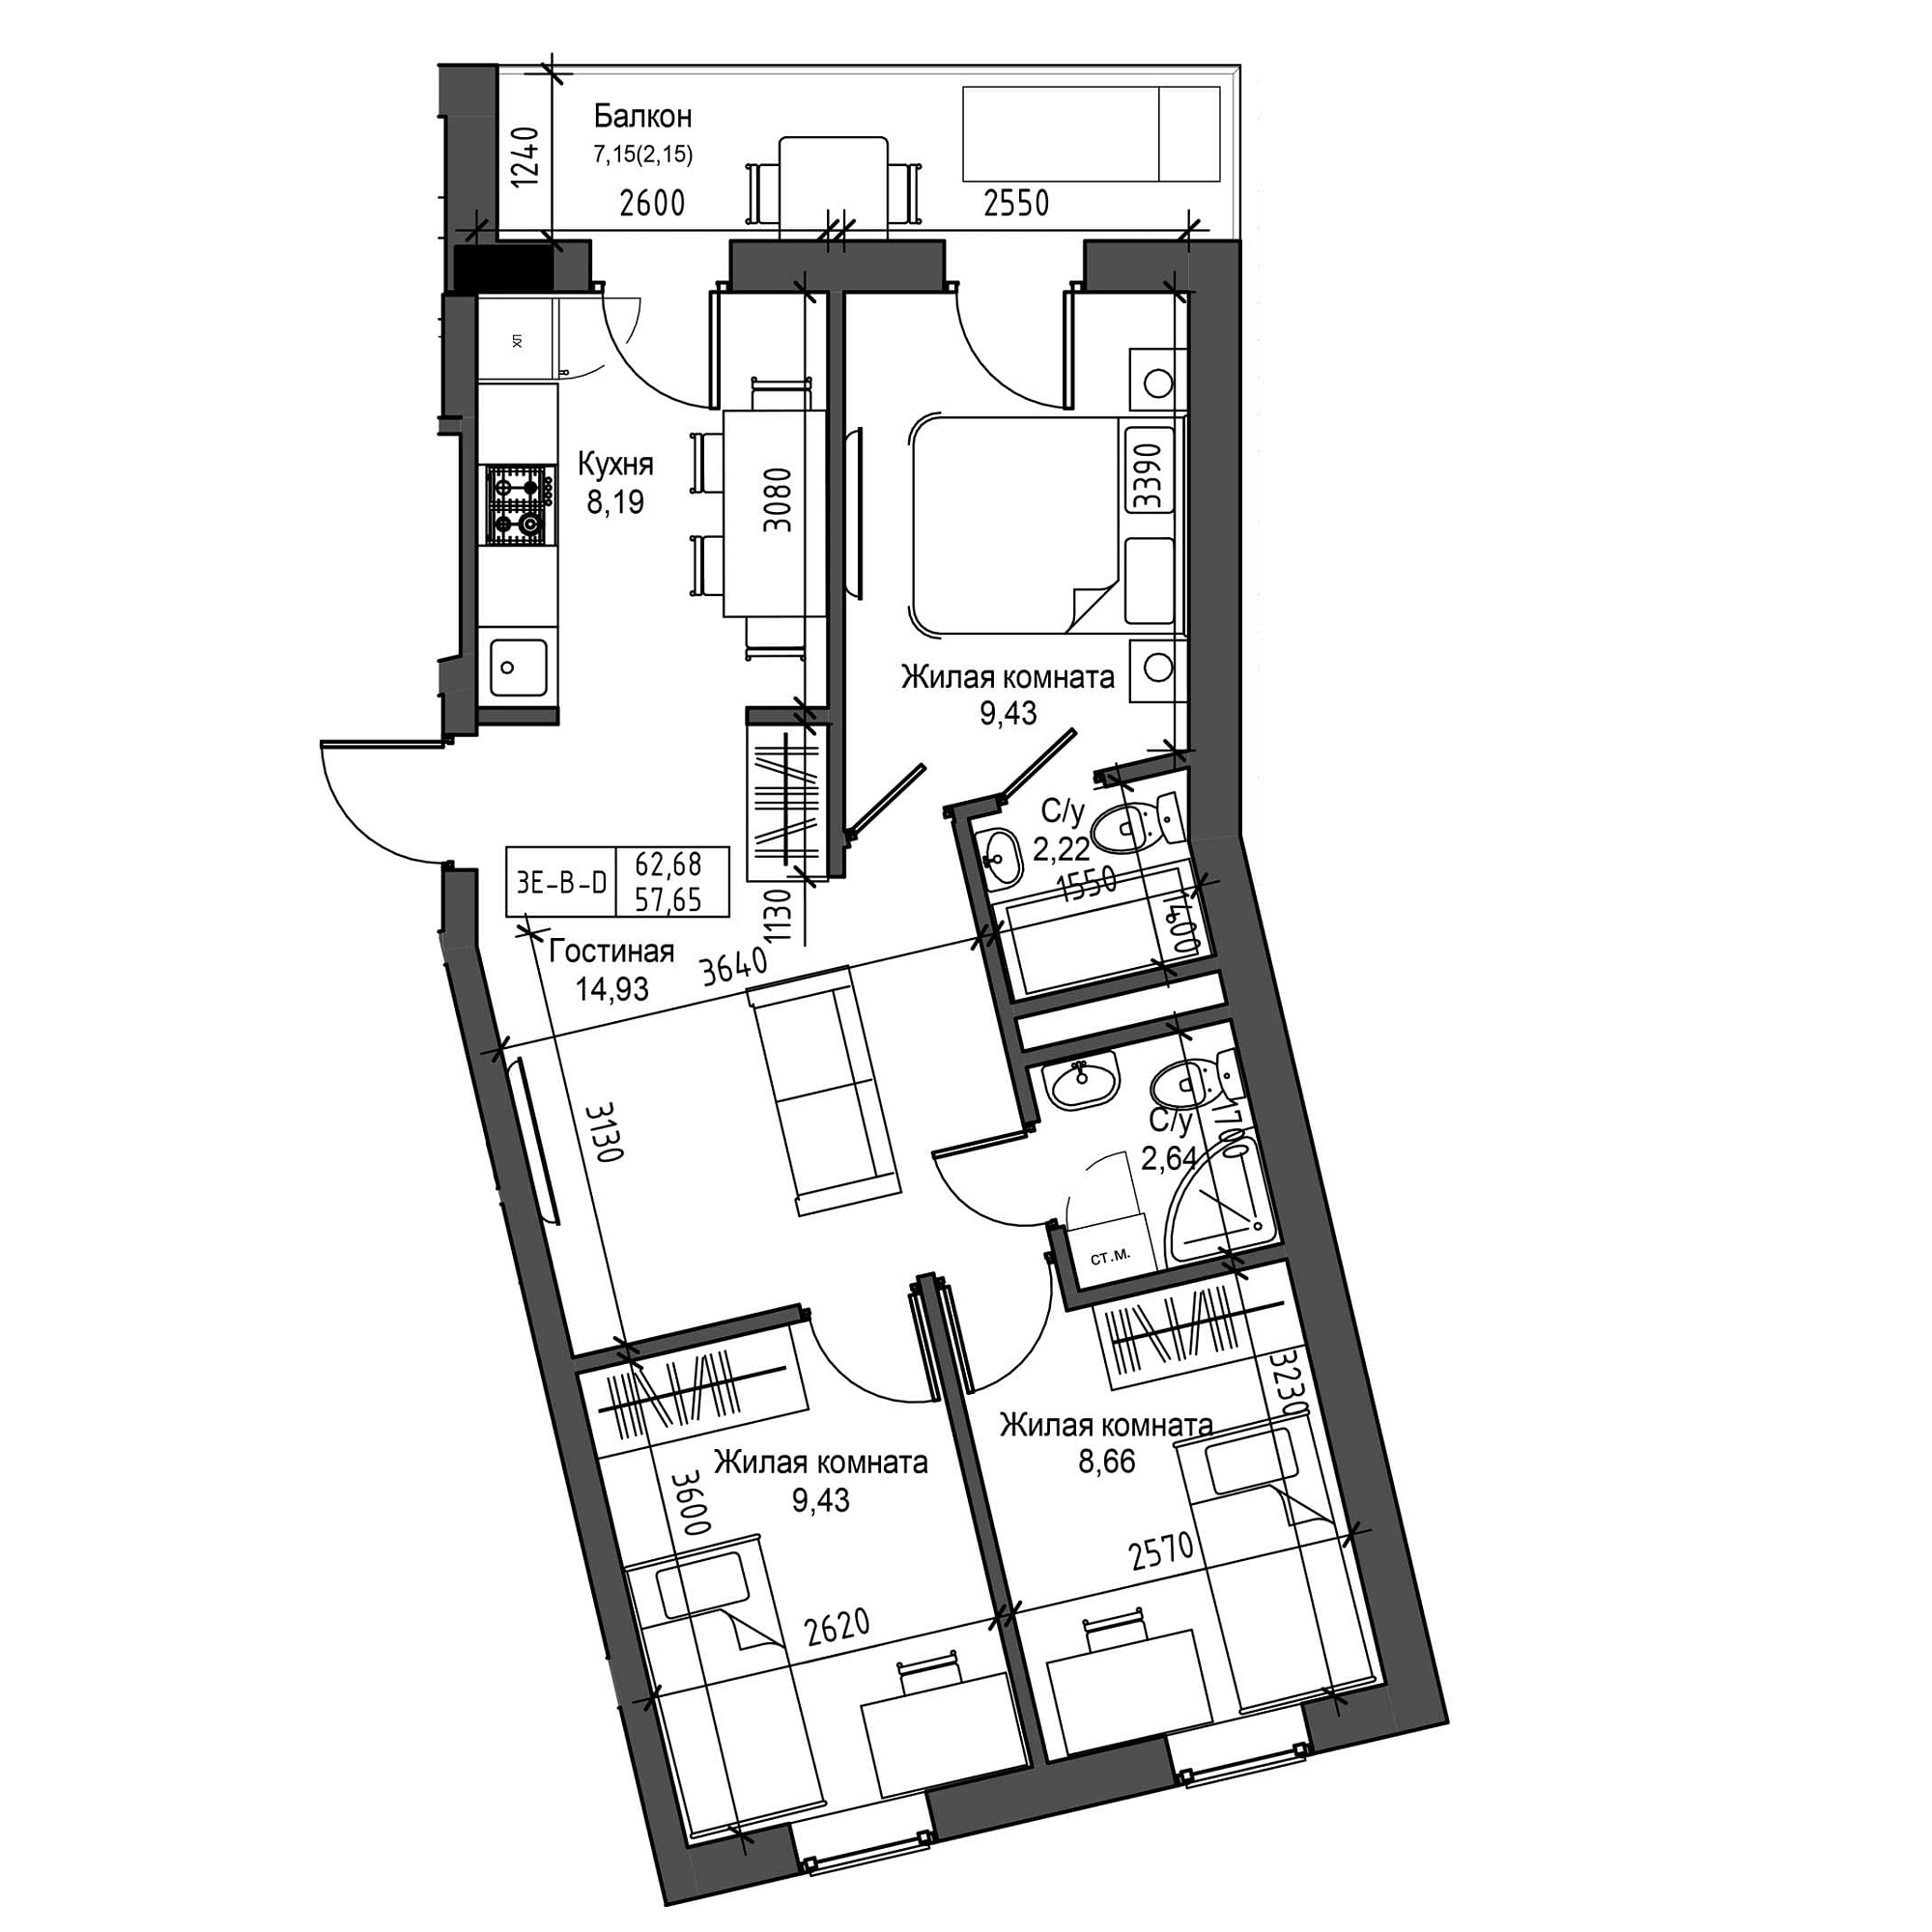 Planning 3-rm flats area 57.65m2, UM-001-05/0006.